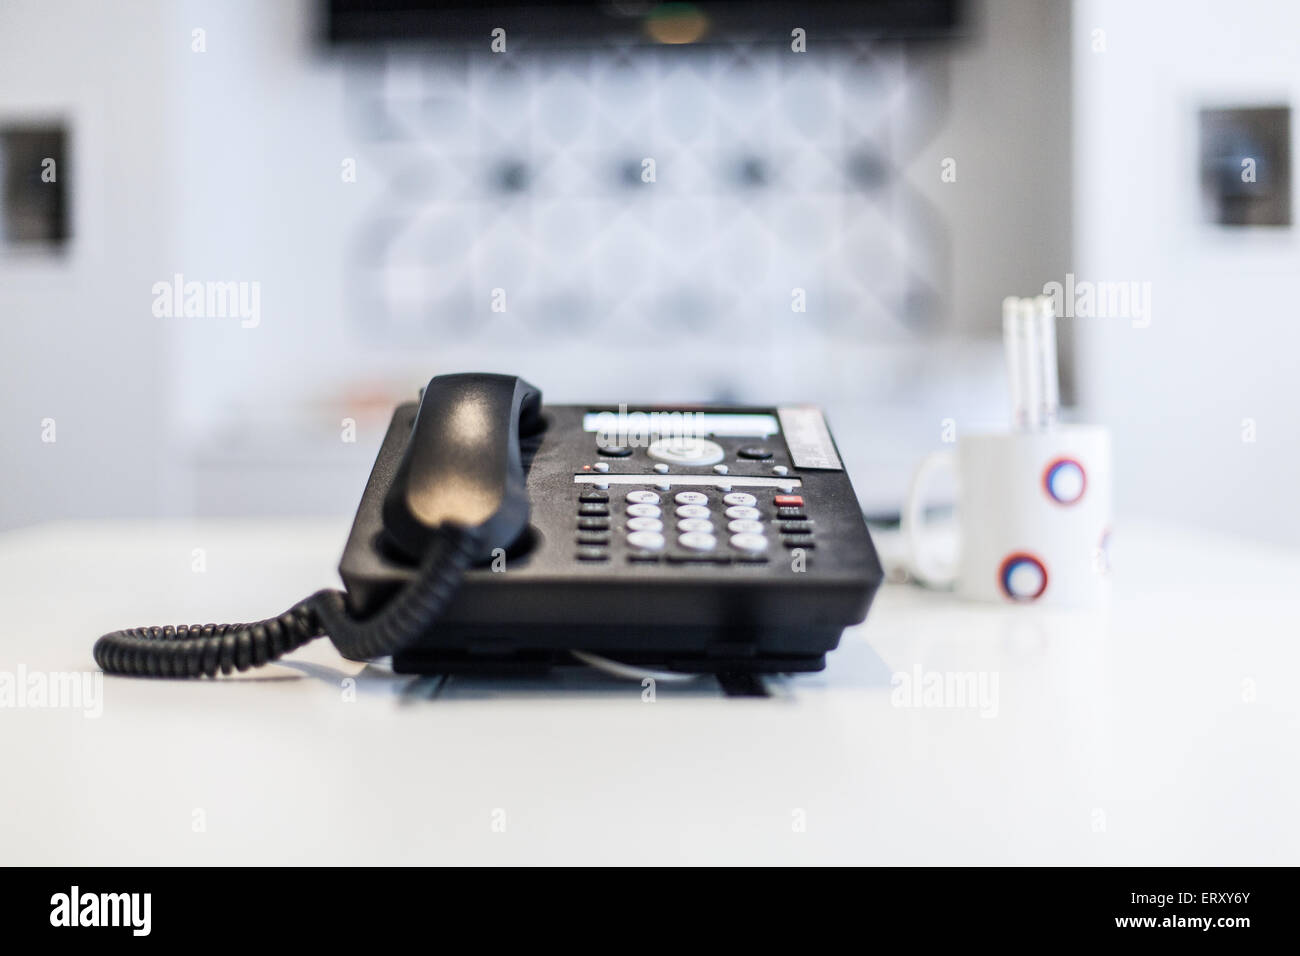 Office phone on white desk Stock Photo